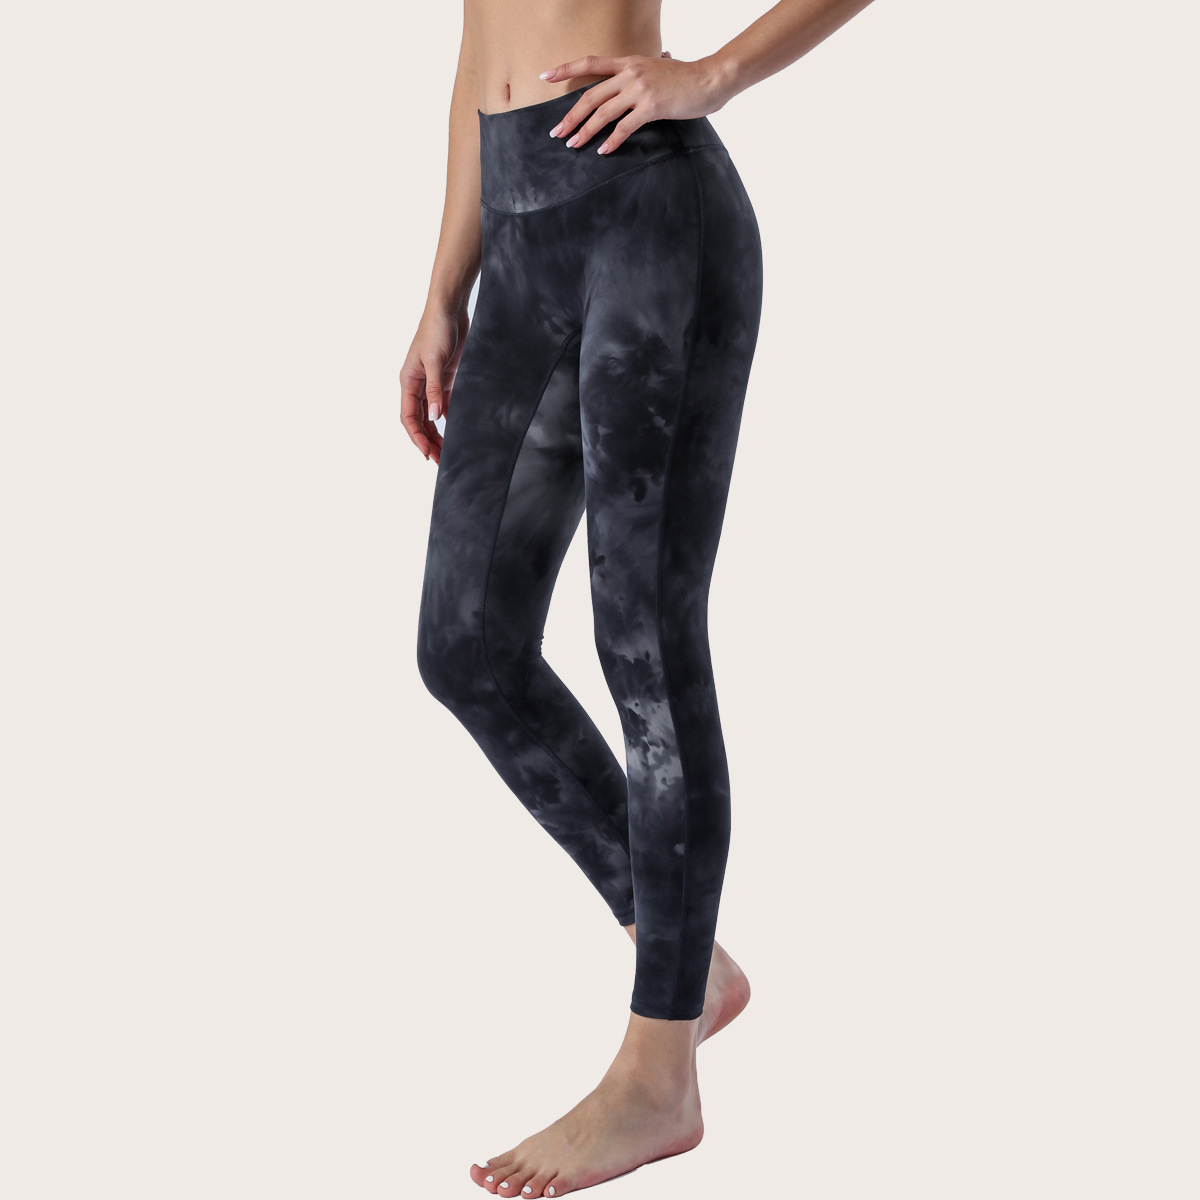 

Lulu Pant Yoga Leggings Woman Push Fitness Skin-friendly High Waist Seamless Align Legging Hip Lift Tie-dyed Casual Capris Ninth Pants Jogging Women Pants Lady Tie-dye, #4